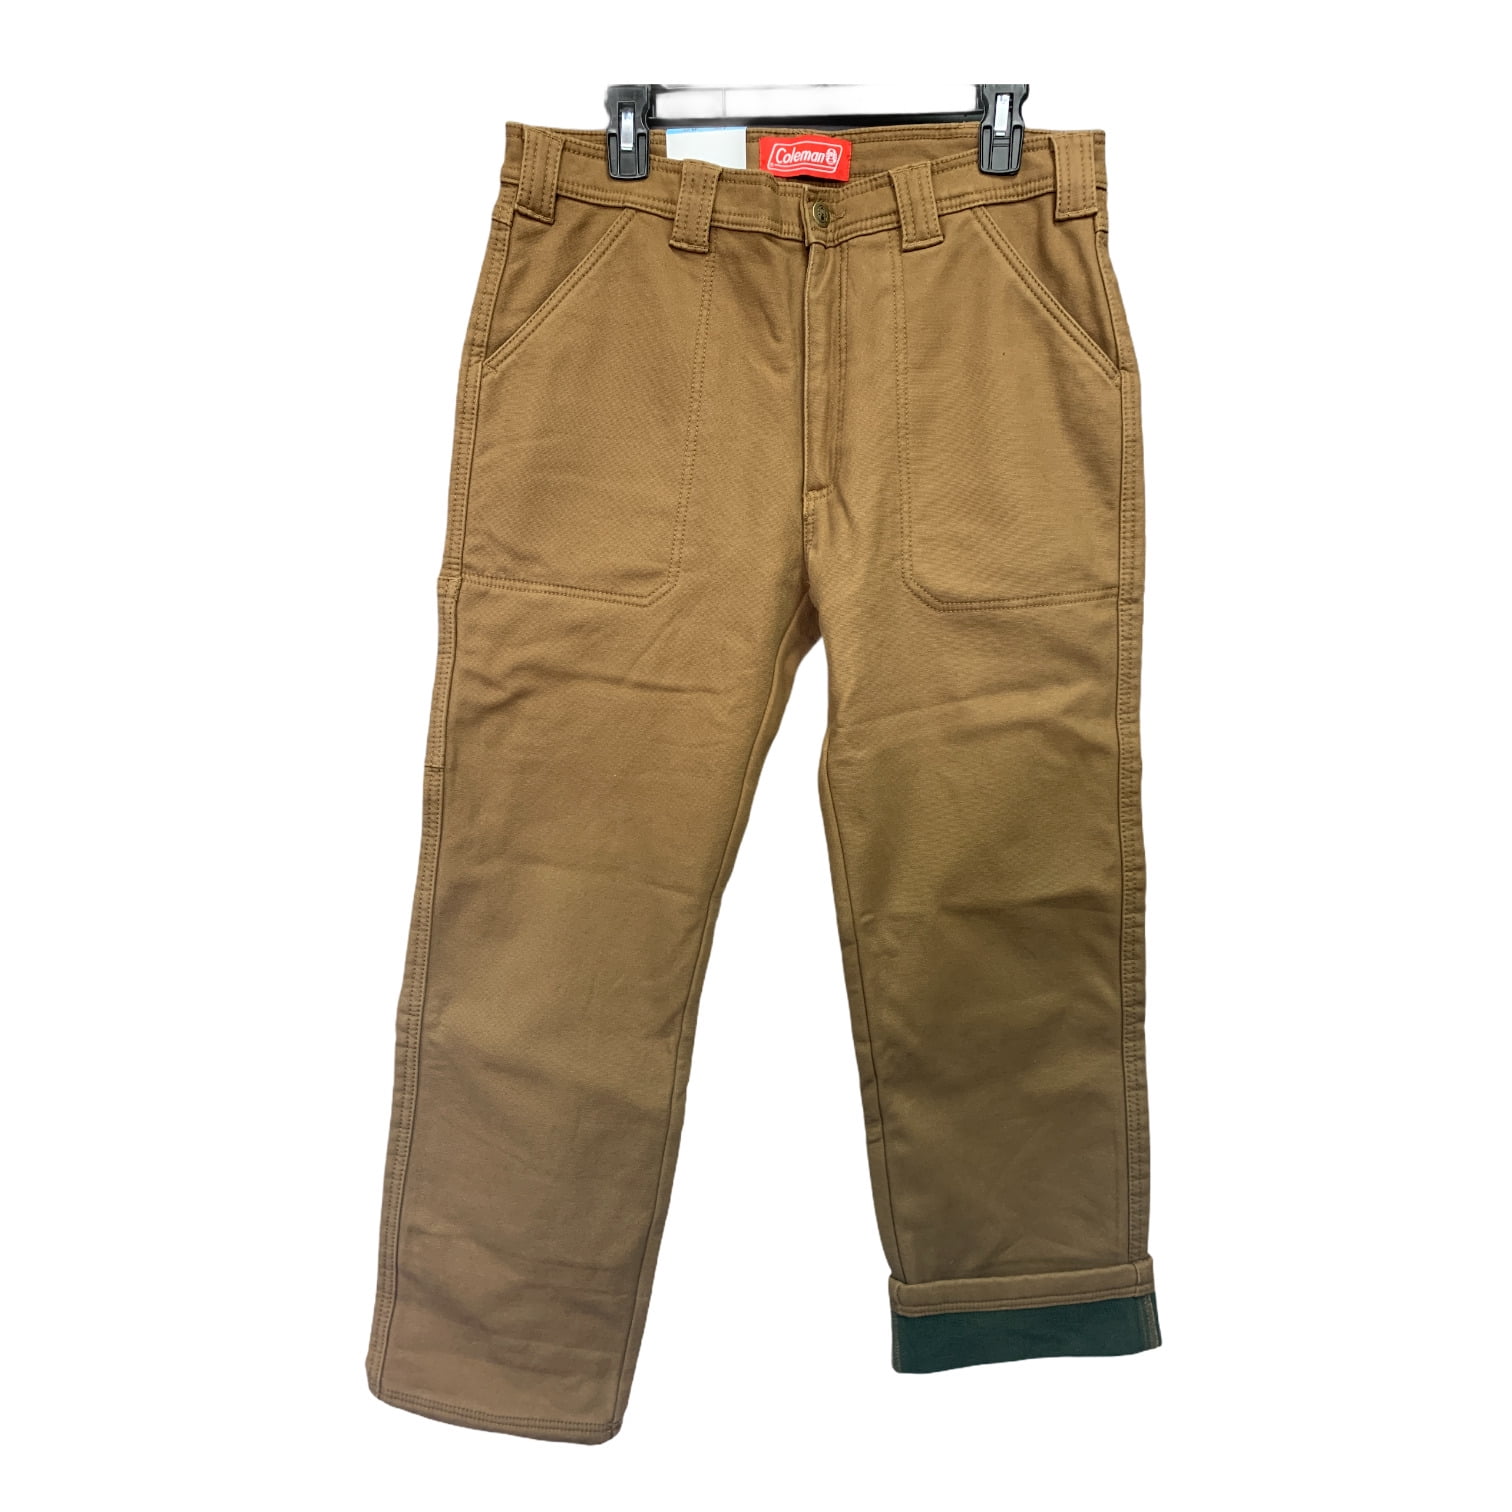 Coleman Fleece Lined Stretch & Tear Resistant Rugged Pants (Caramel, 36x30)  